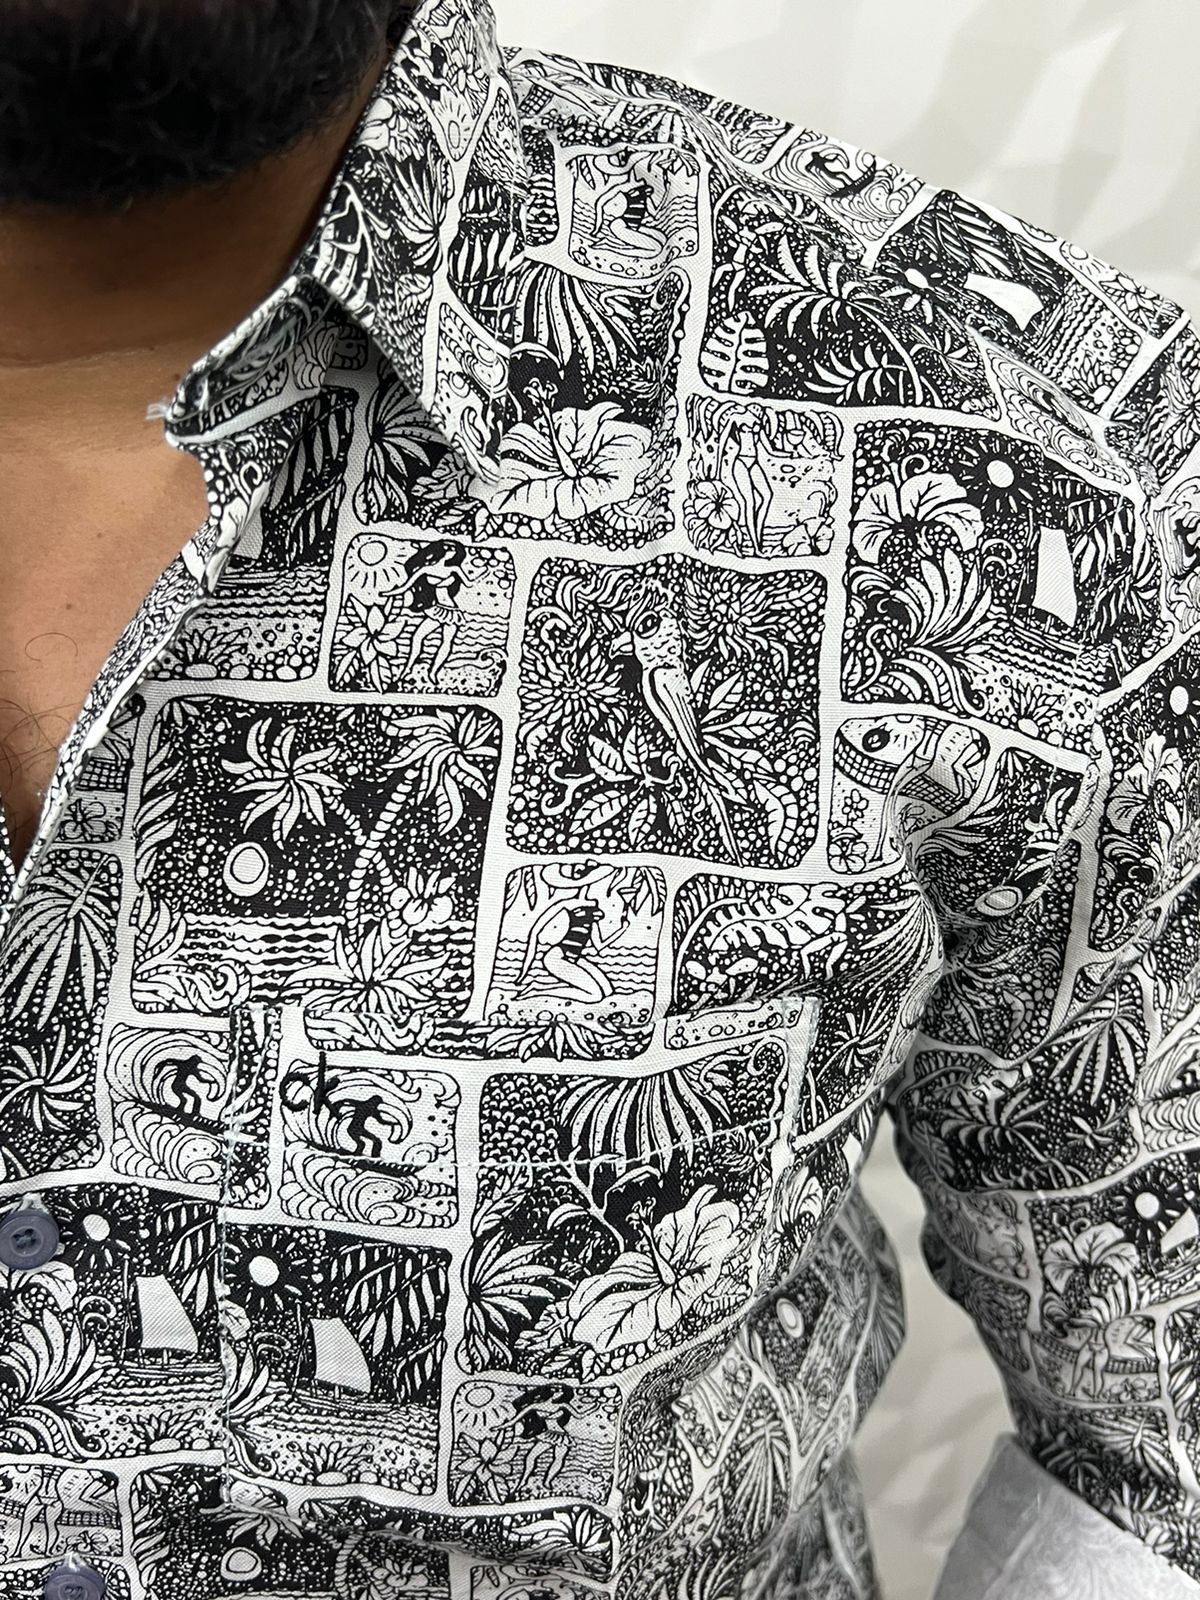 Oxford fabric export print shirt